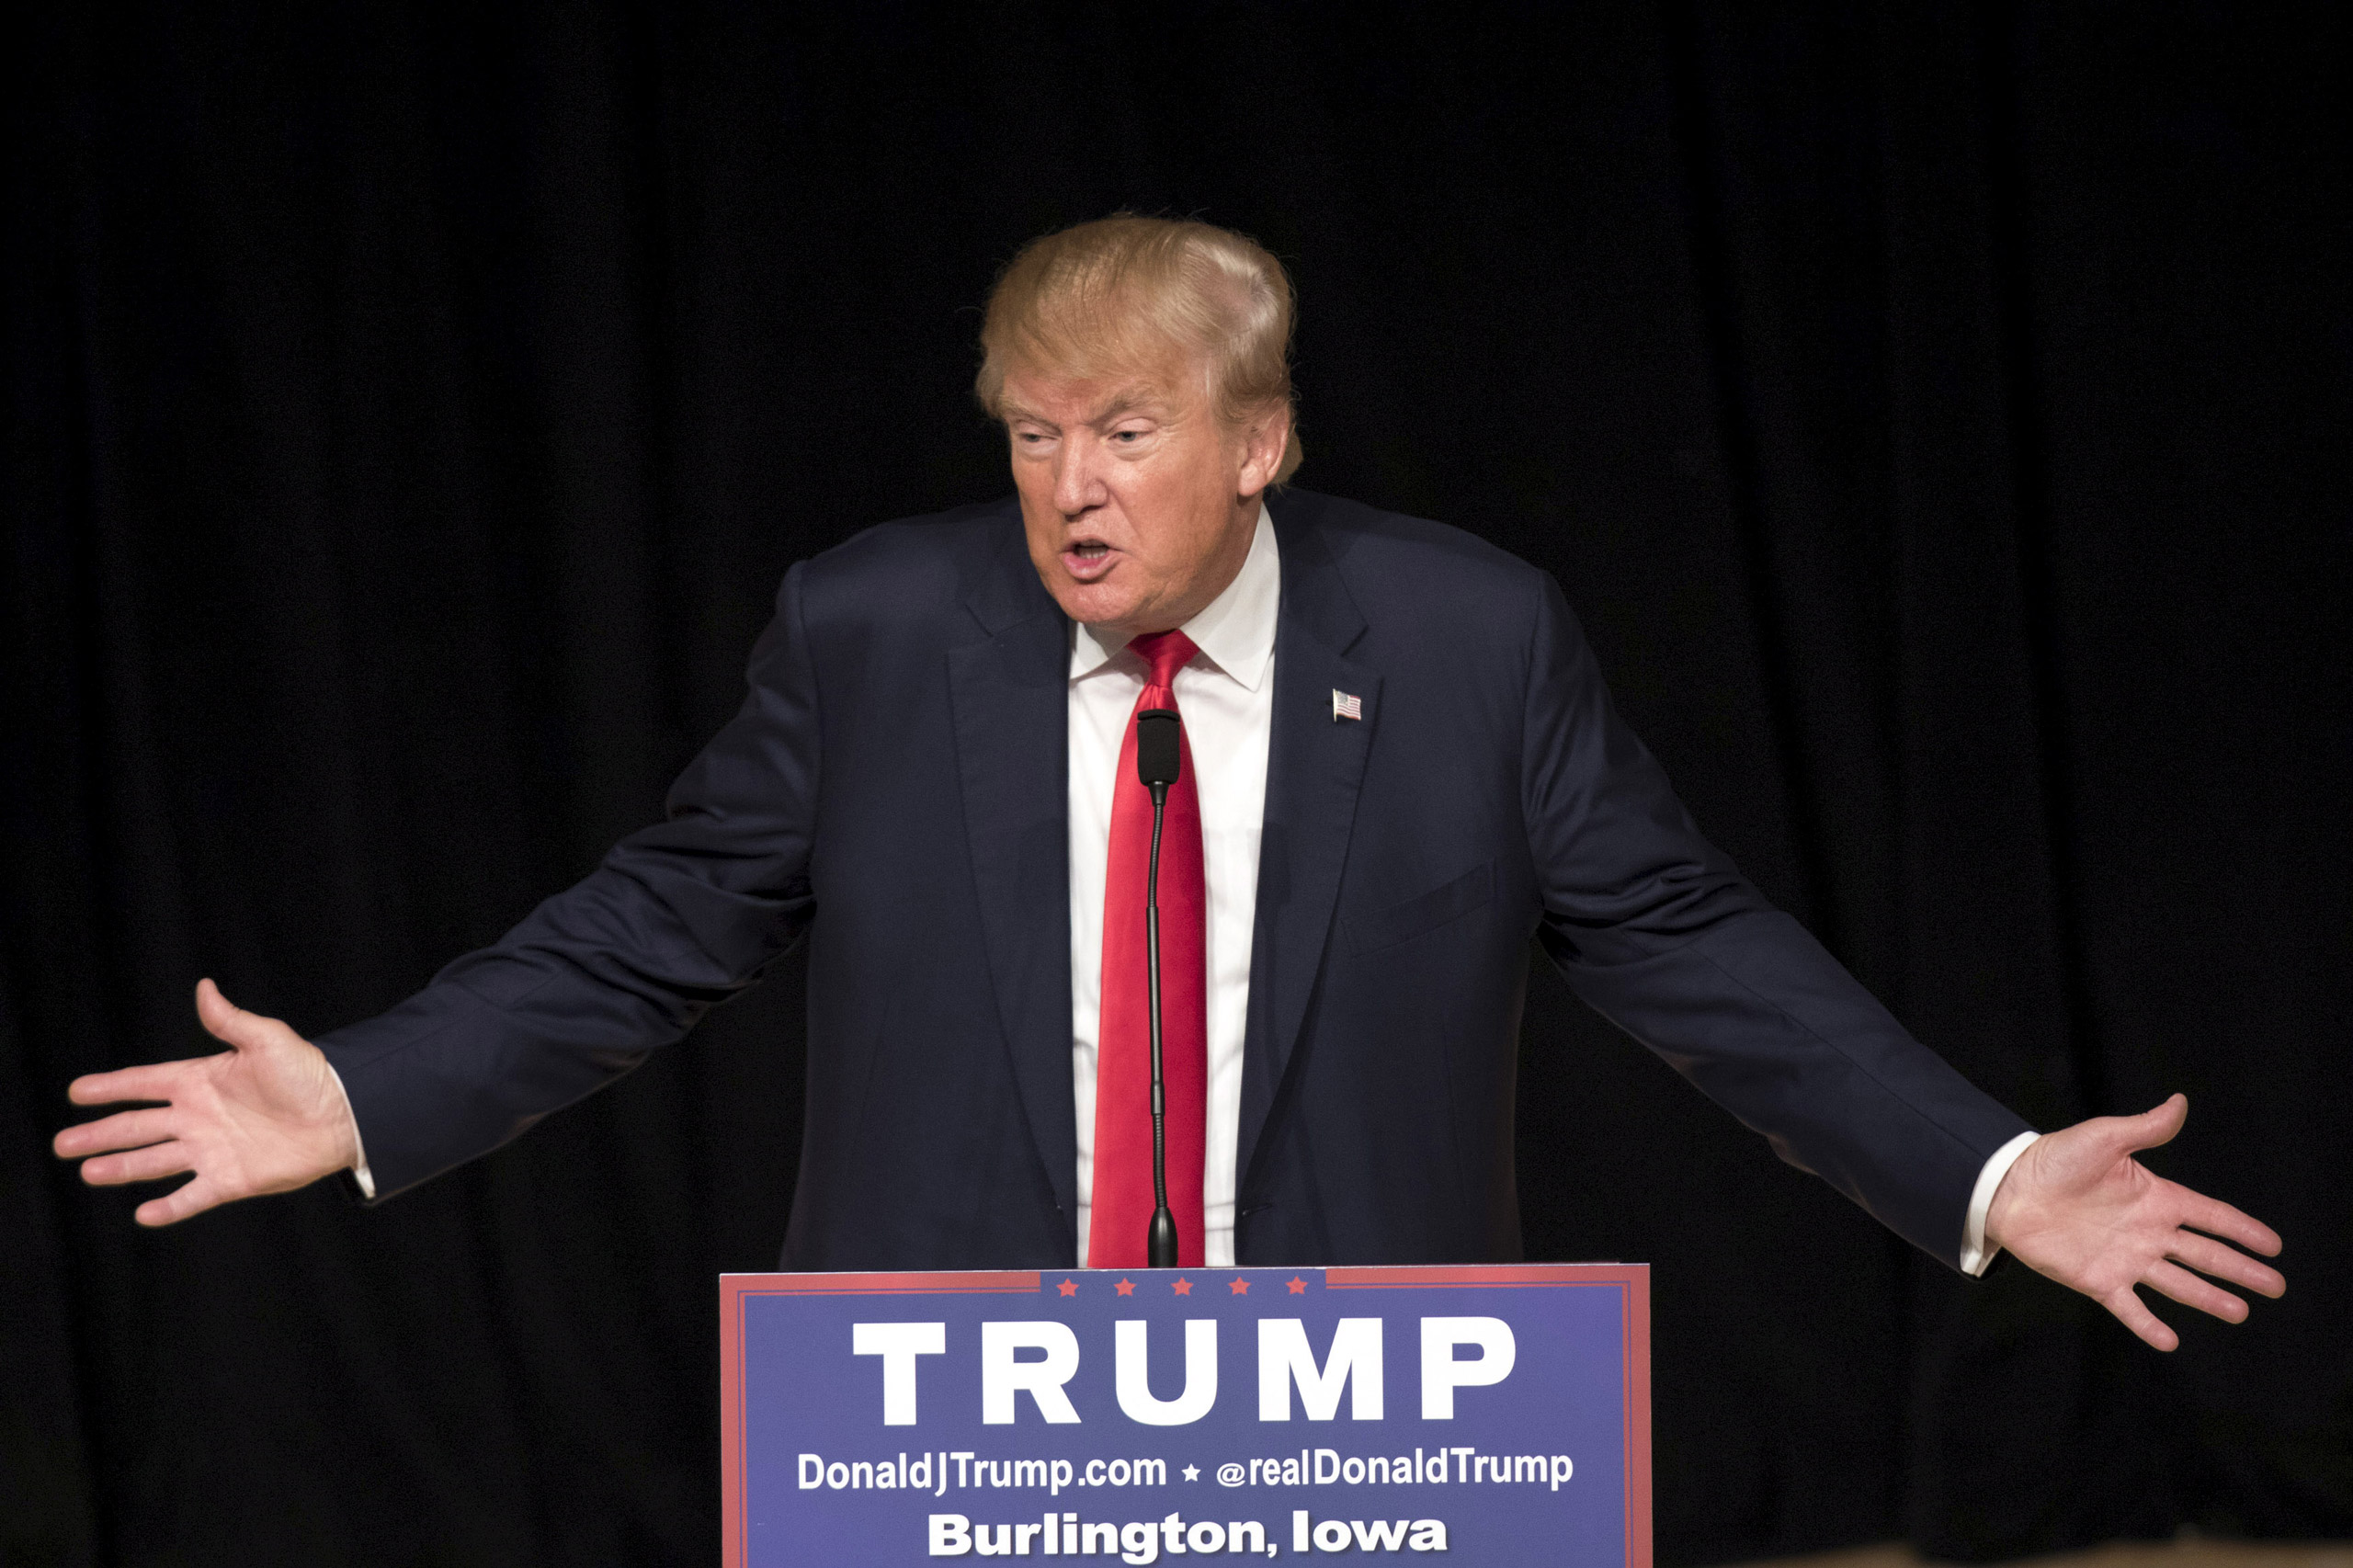 Republican presidential candidate Donald Trump speaks during a campaign rally at Burlington Memorial Auditorium in Burlington, Iowa, on Oct. 21, 2015. (Scott Morgan—Reuters)